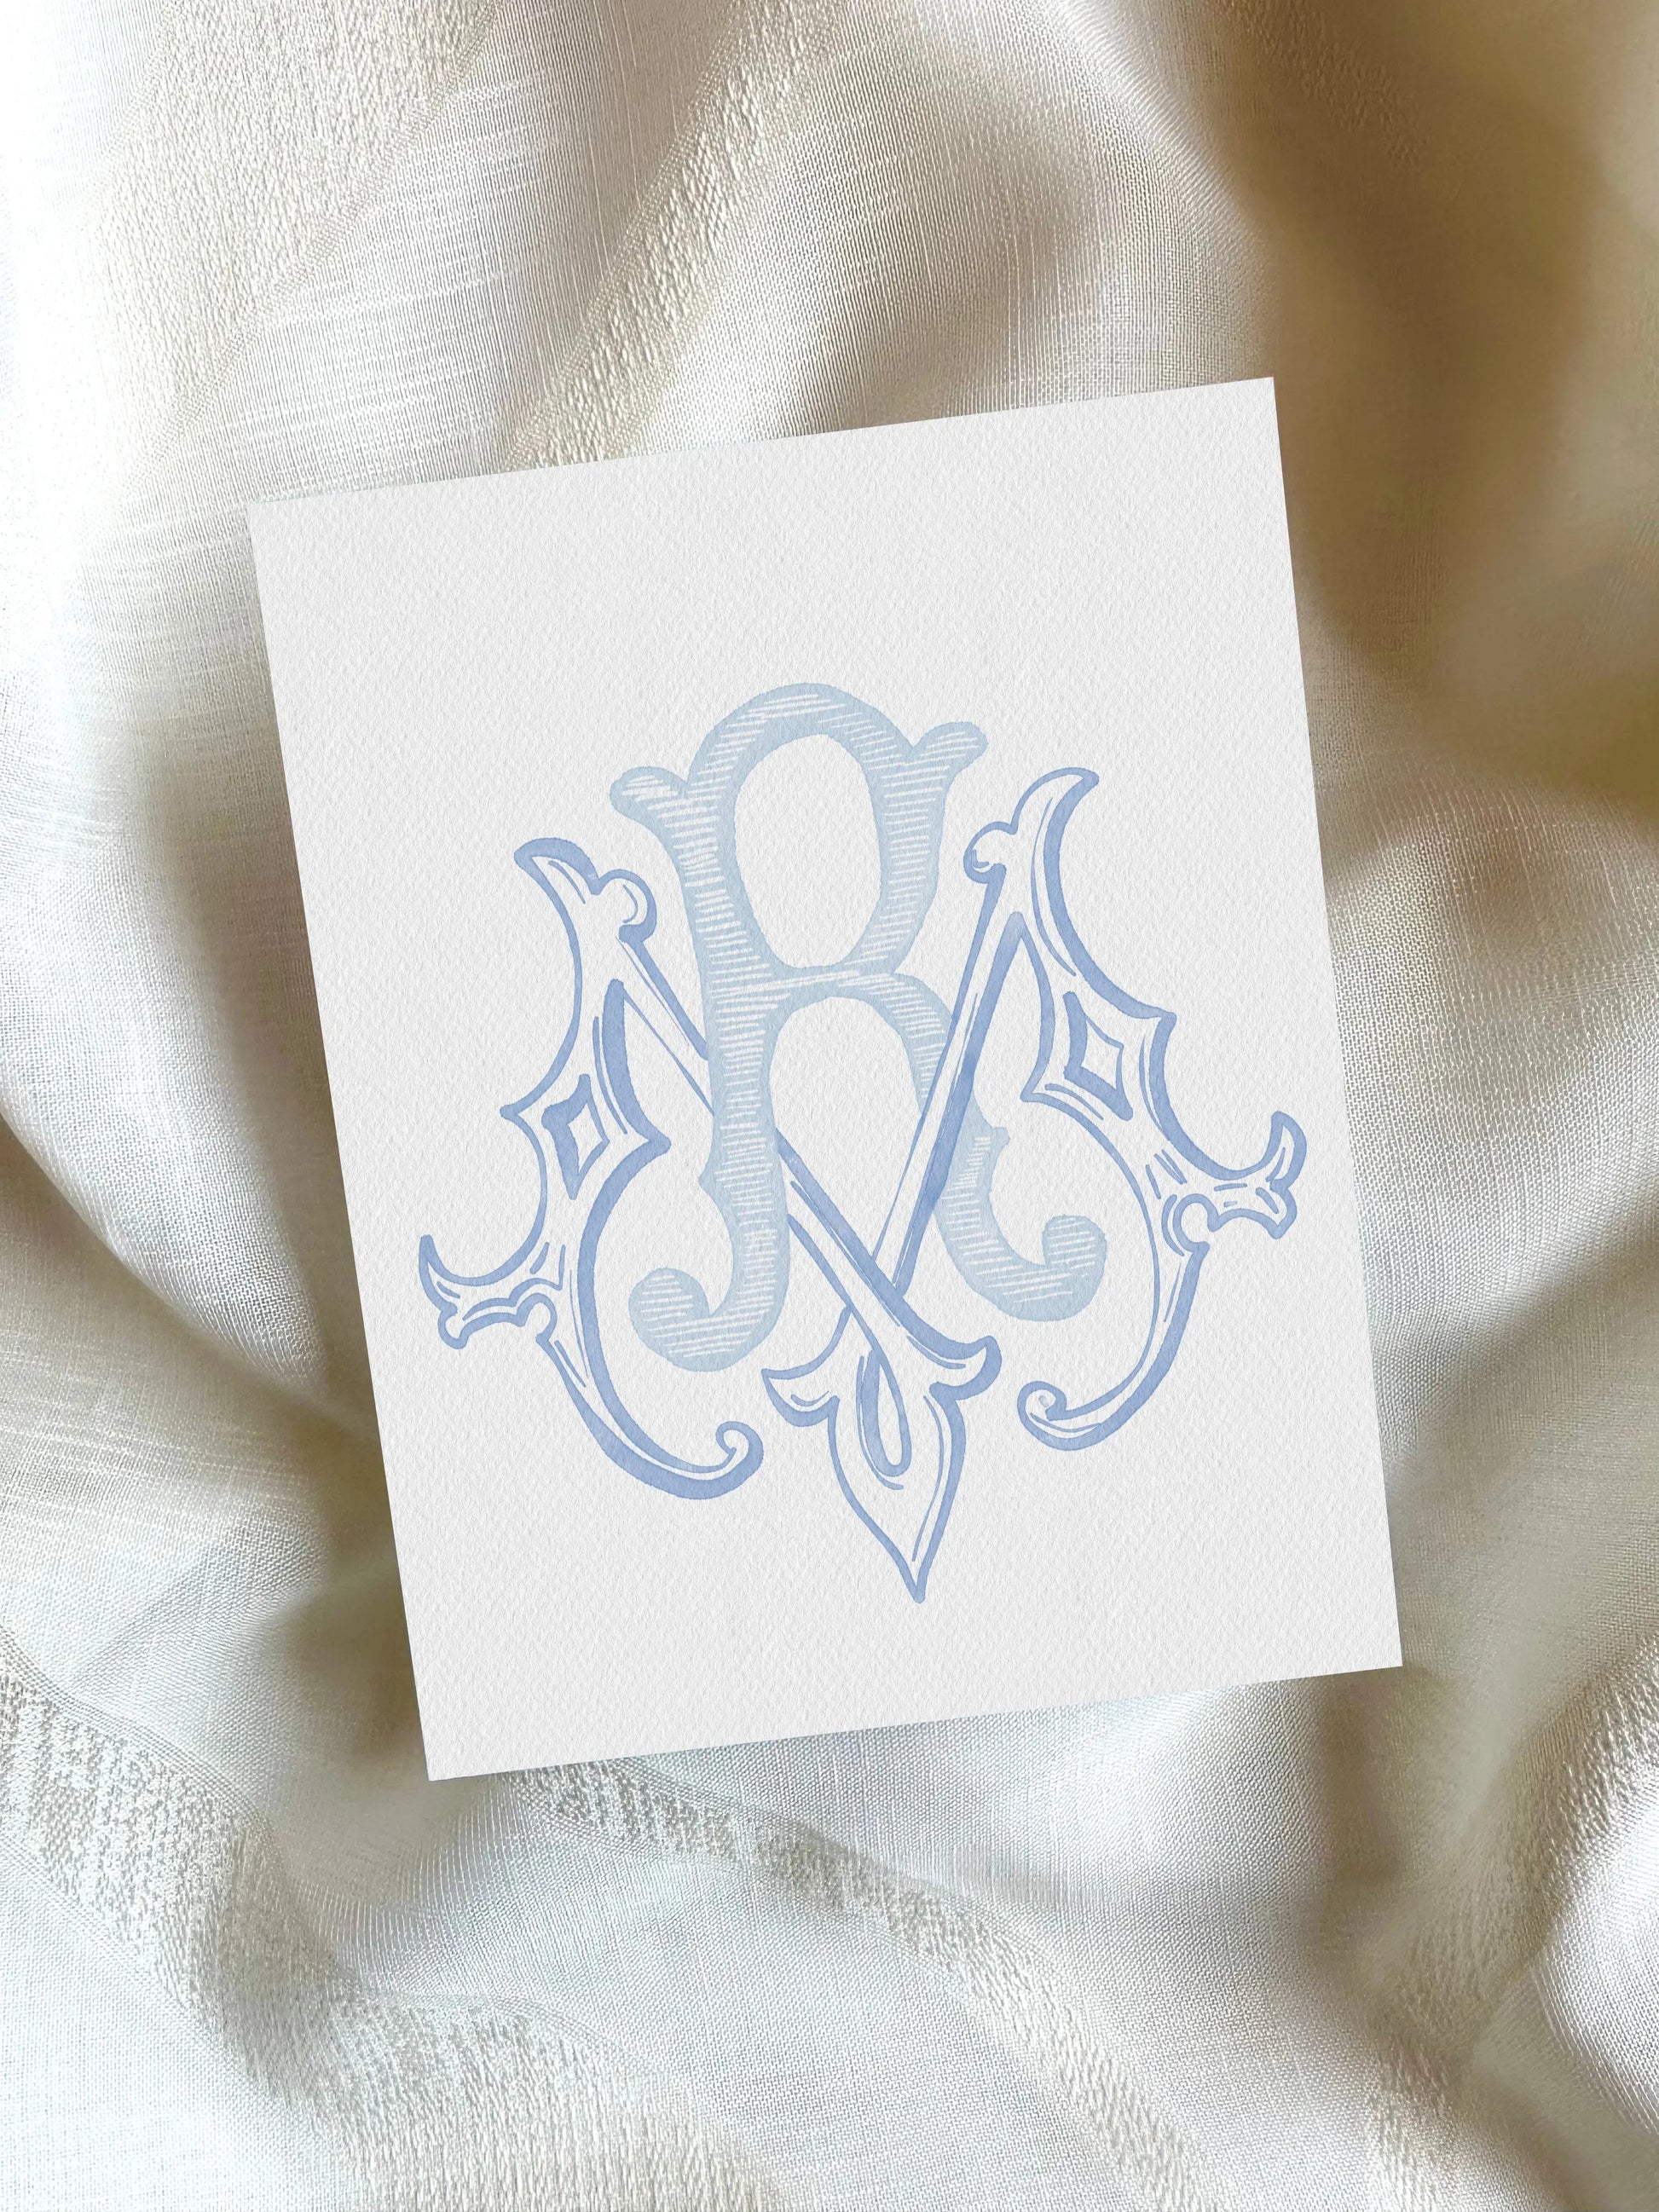 2 Letter Monogram with Letters RM | Digital Download - Wedding Monogram SVG, Personal Logo, Wedding Logo for Wedding Invitations The Wedding Crest Lab